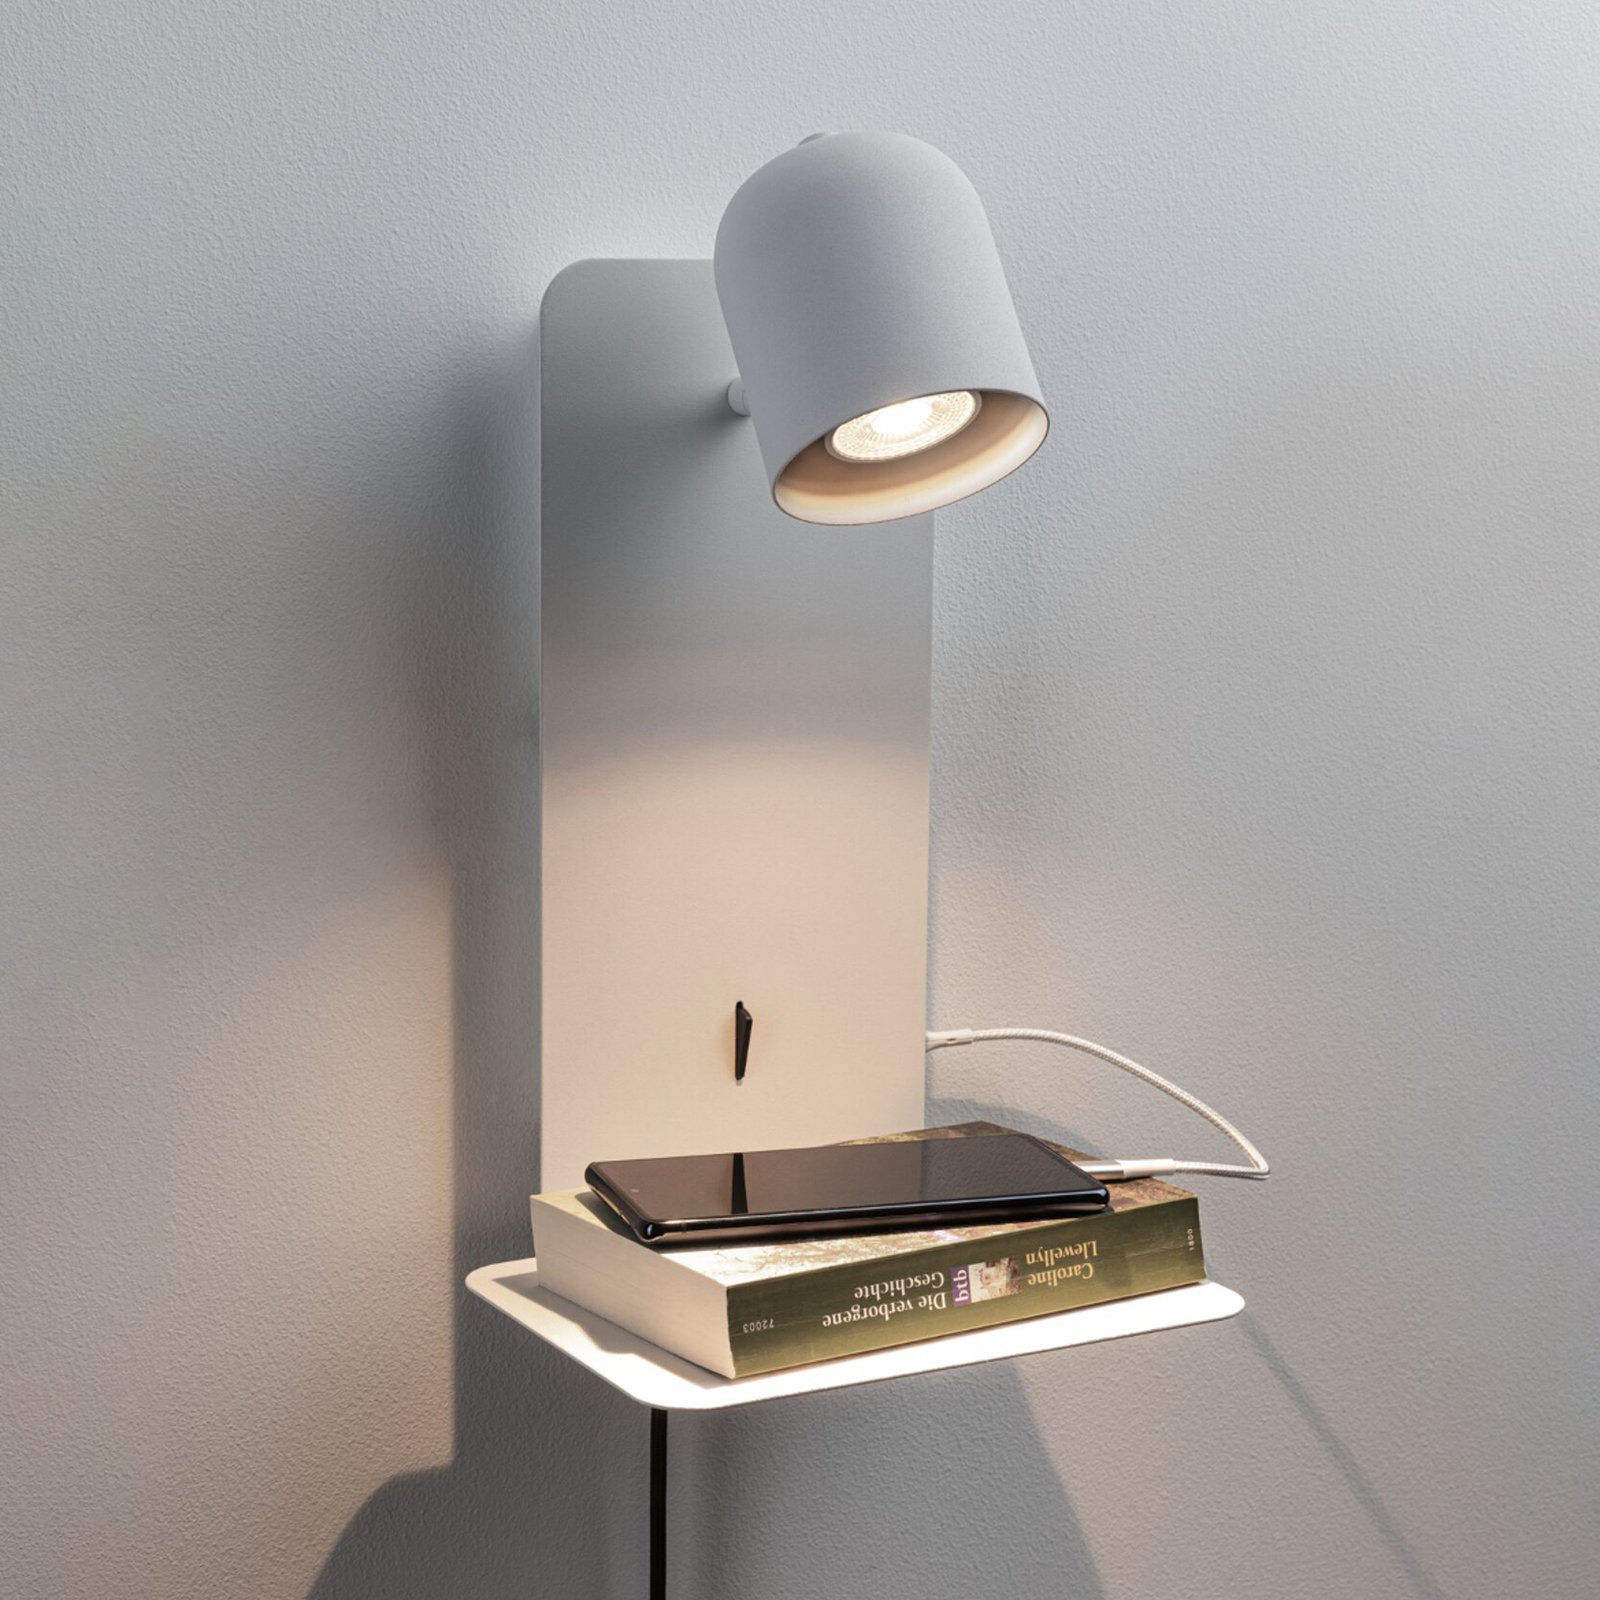 Paulmann Malena USB wall spotlight, shelf, white